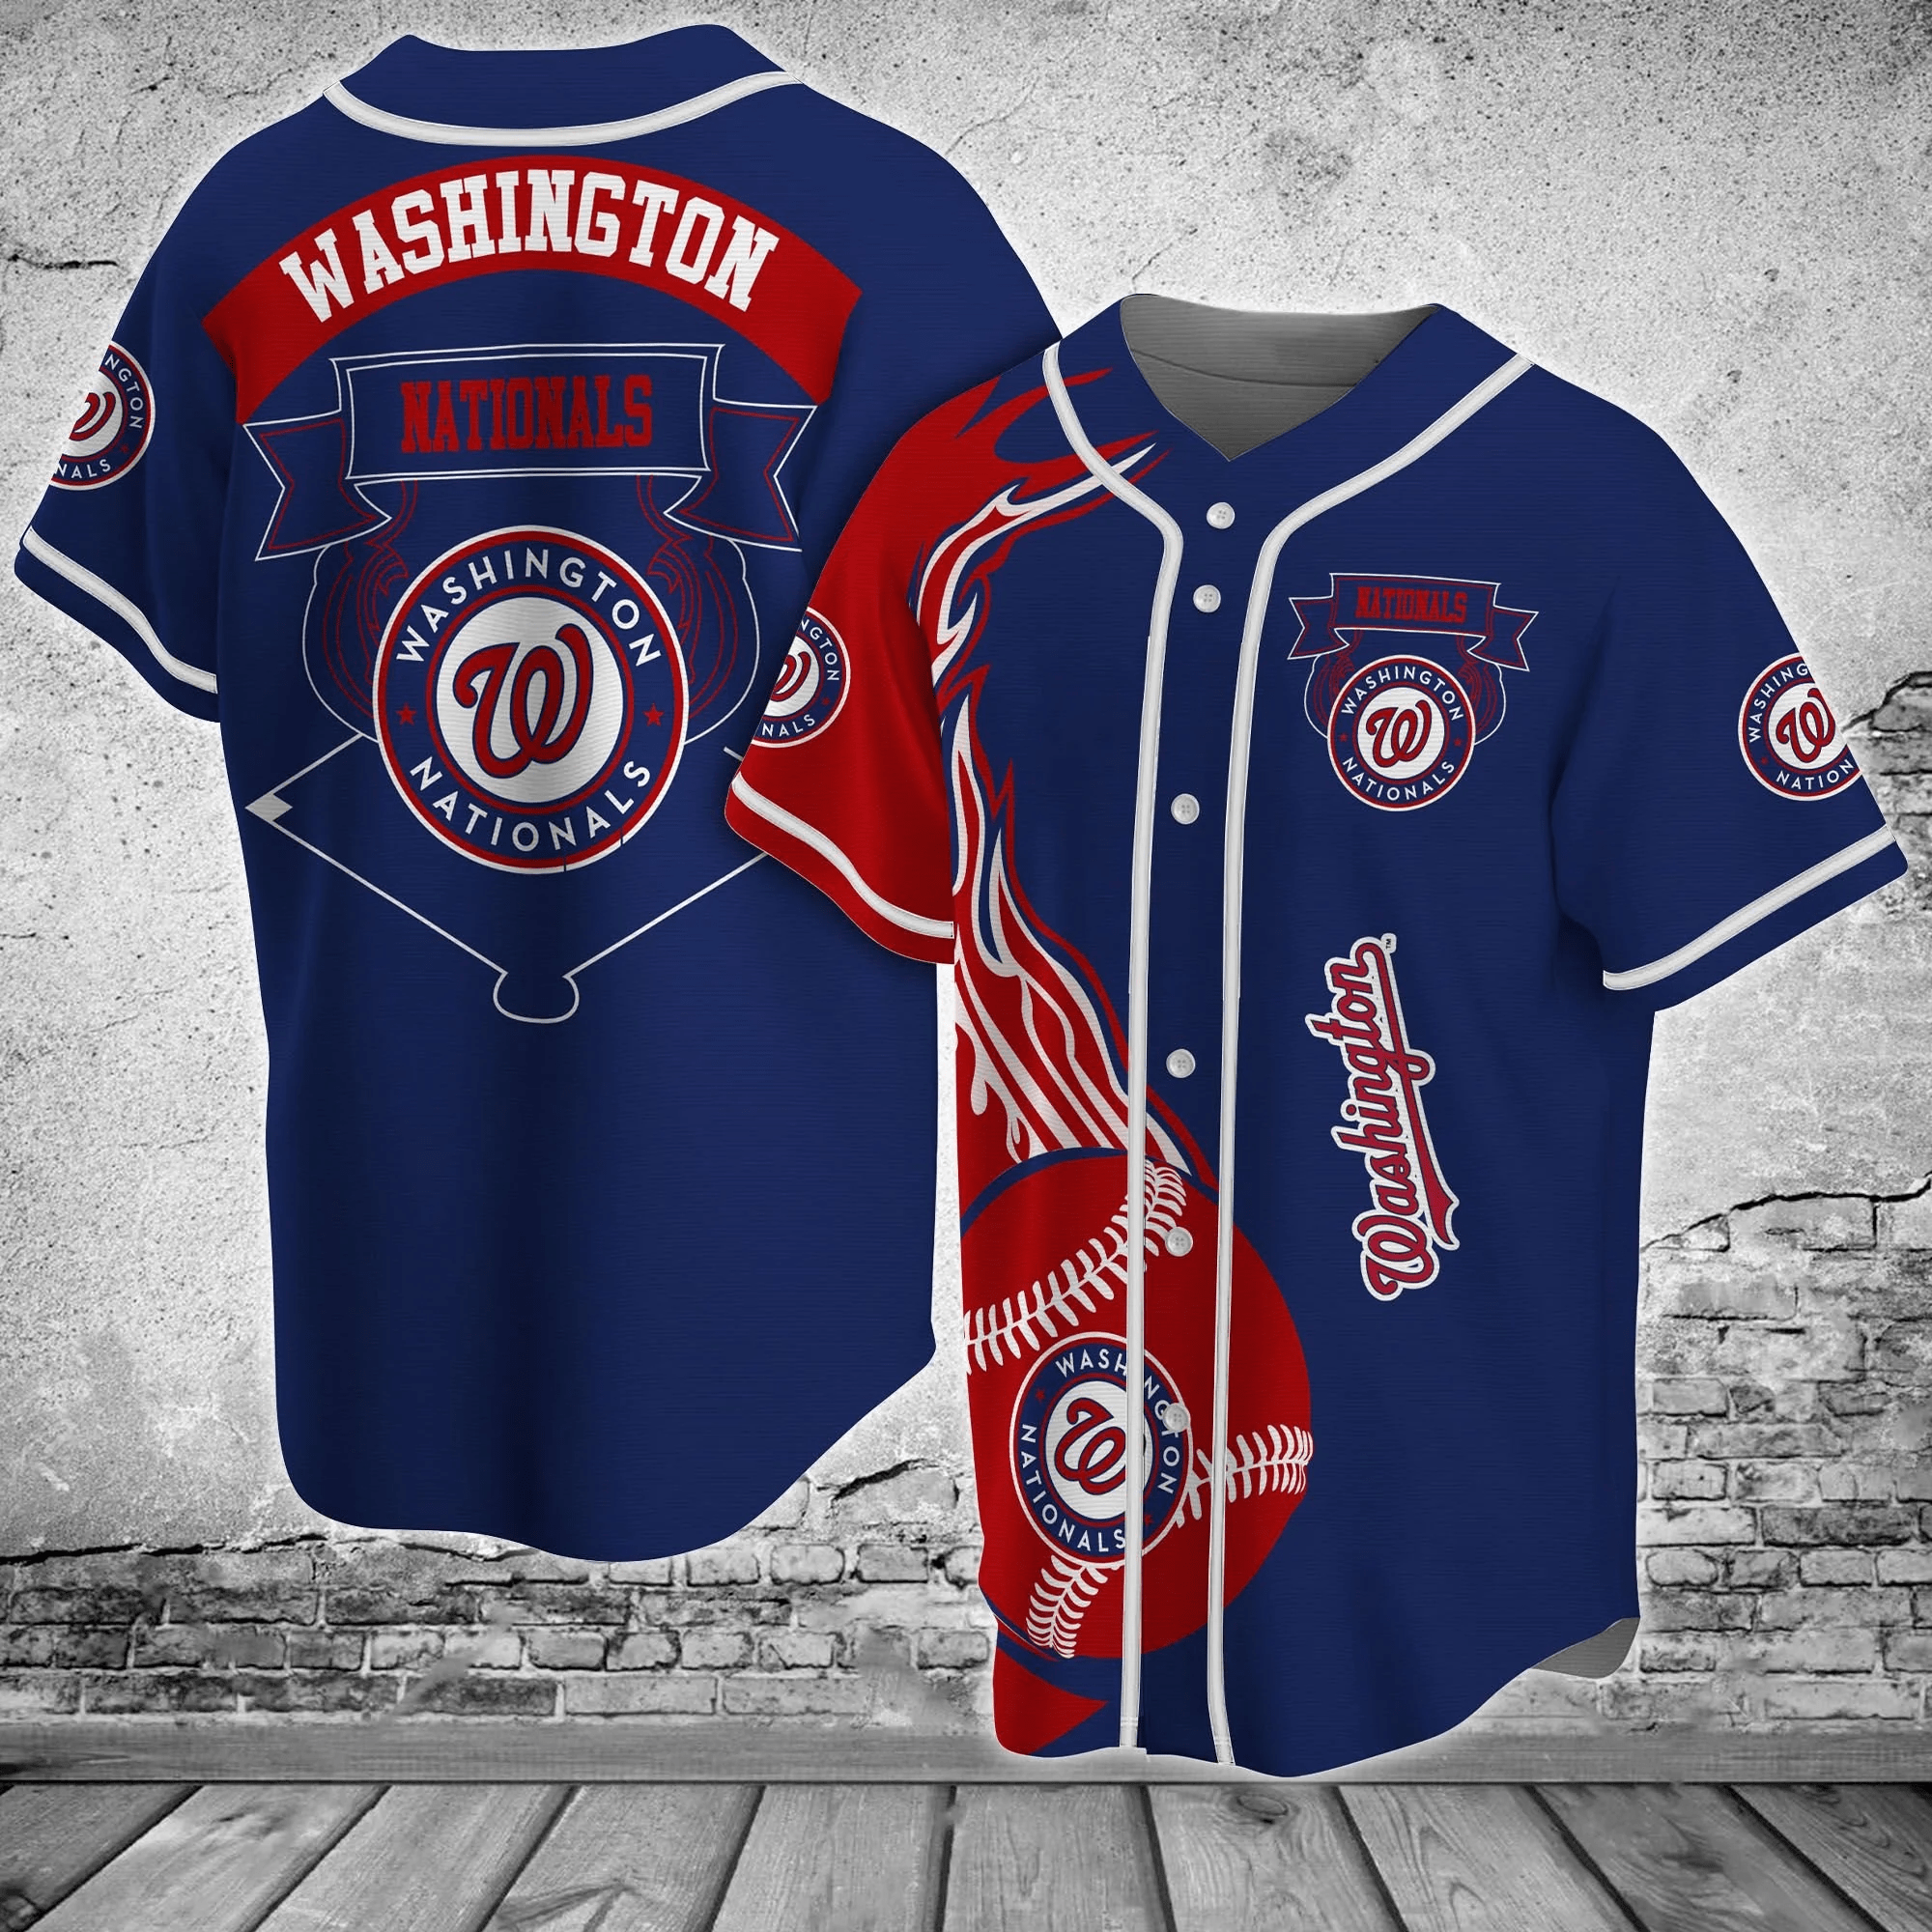 Washington Nationals MLB Baseball Jersey Shirt - Classic Design FVJ